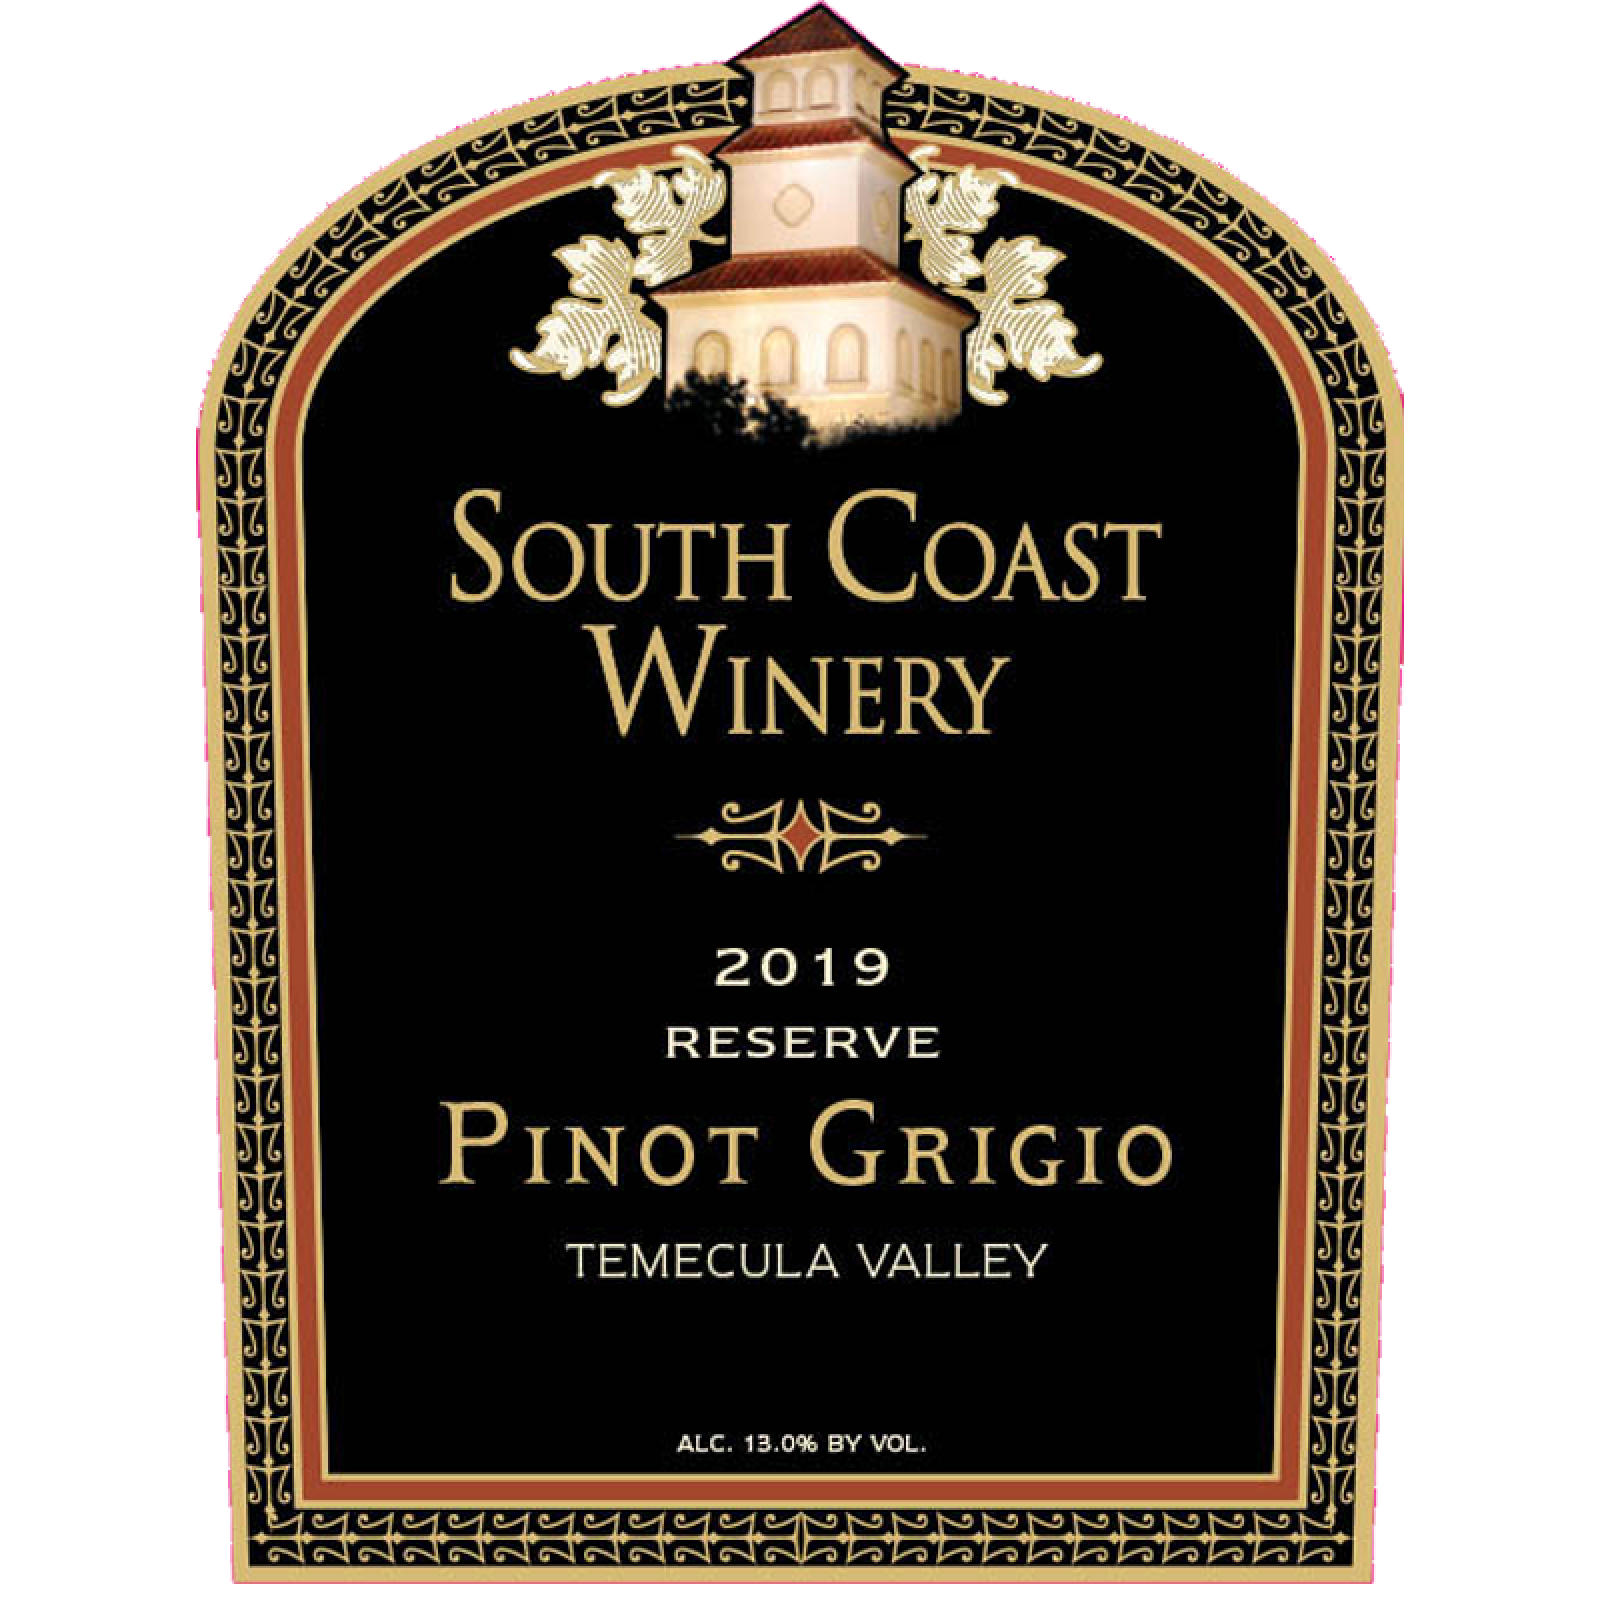 South Coast Winery Pinot Grigio Reserve 2019